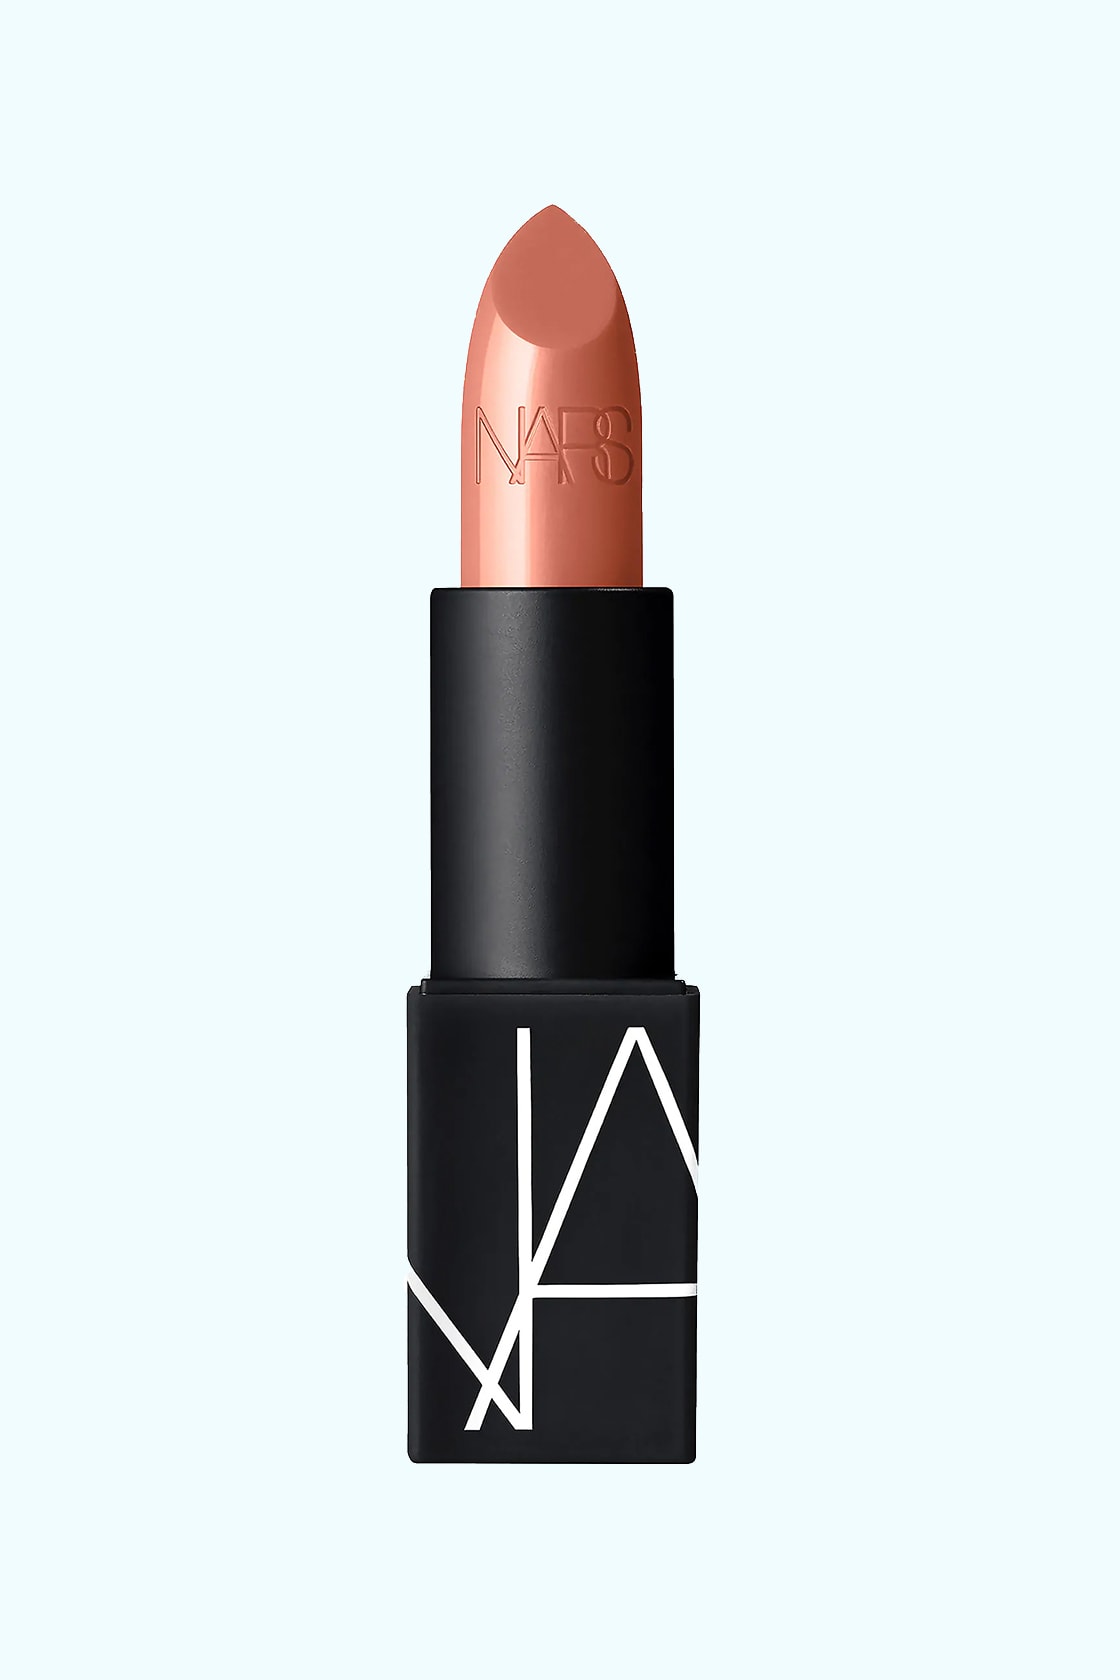 nars makeup lipstick pink nude shades beauty